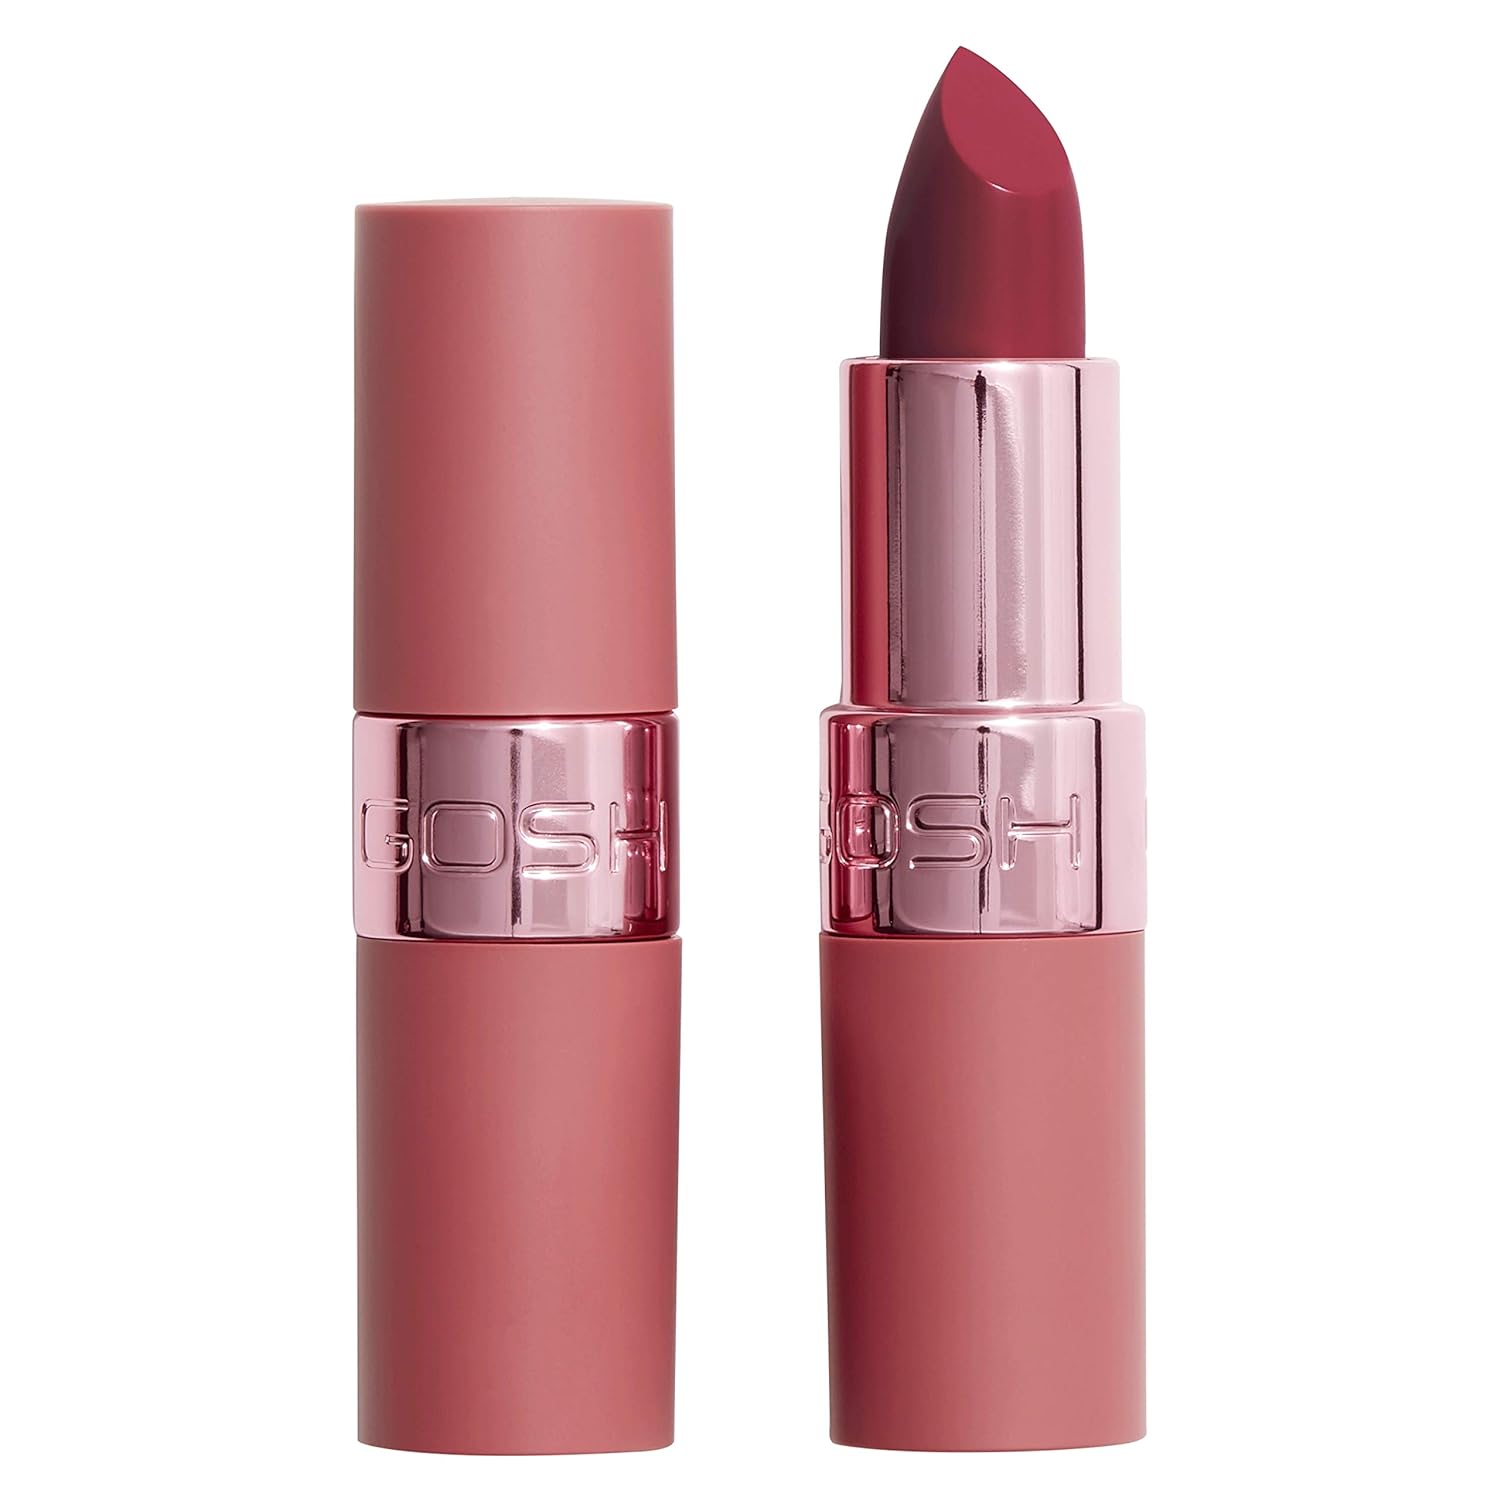 Gosh Luxury Rose Lipstick with Light Shimmer, Intense Pink Tones for a Radiant Result, Moisturises Soft Lips, Long-Lasting, Fragrance Free, 005 Seduce